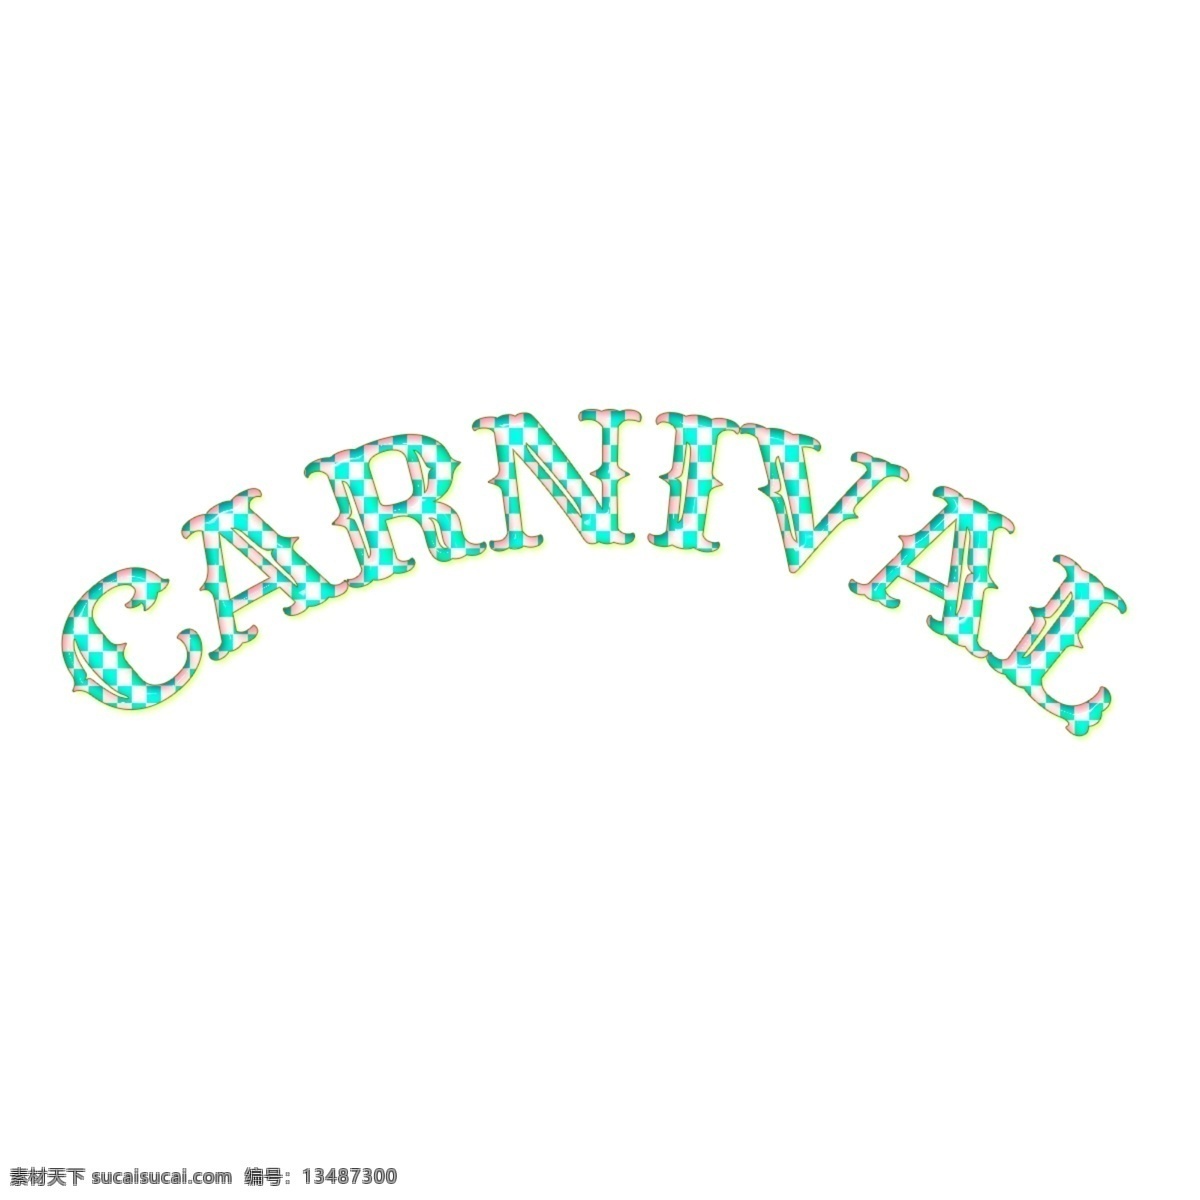 carnivarl 英语 字母表 狂欢节 性格 元素 透明 png元素 词 艺术 英语字母 照明效果 草